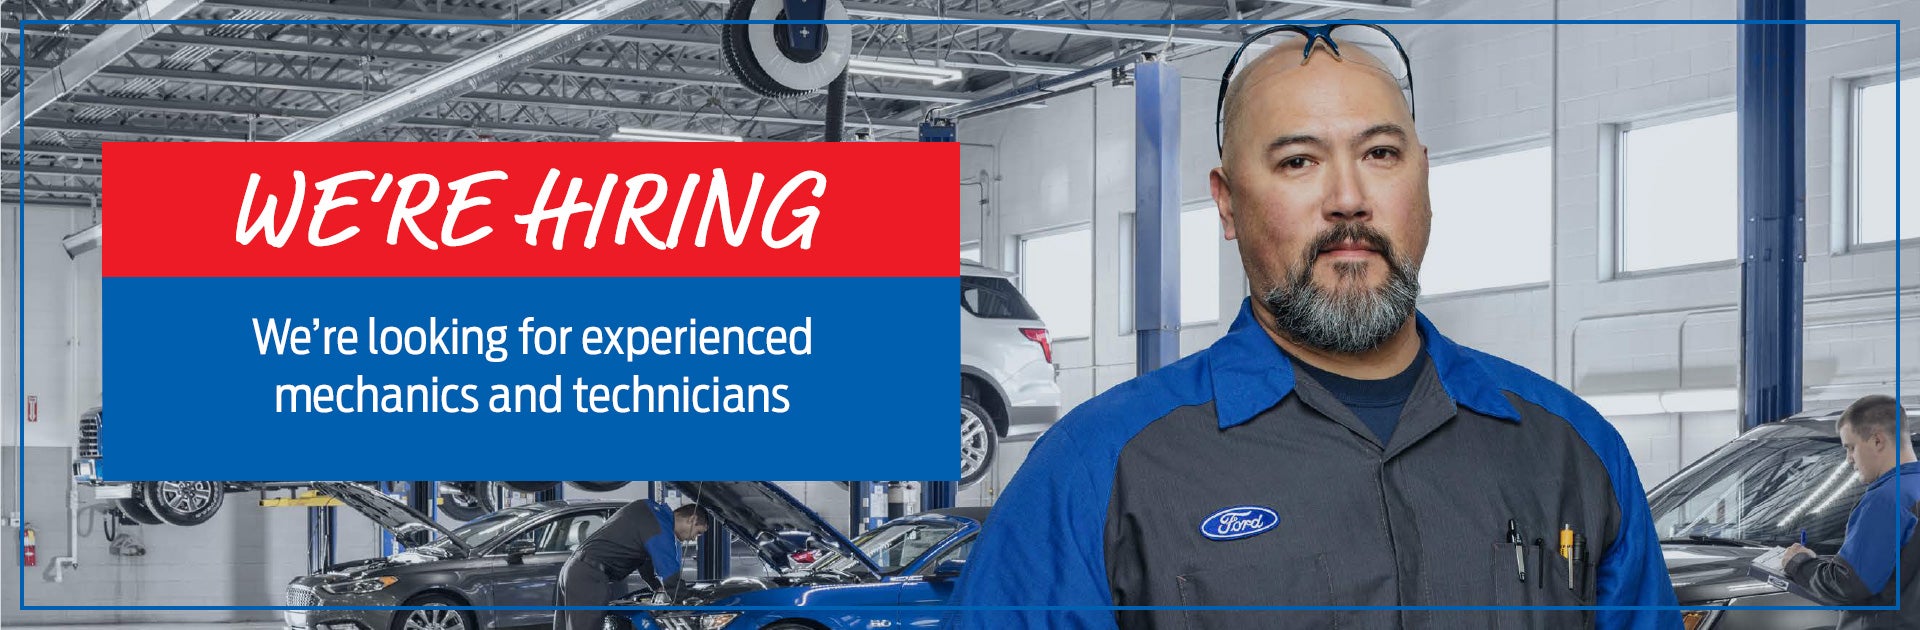 Napa Ford - Napa CA Job Opportunities - Quick Lane Technicians and Mechanics